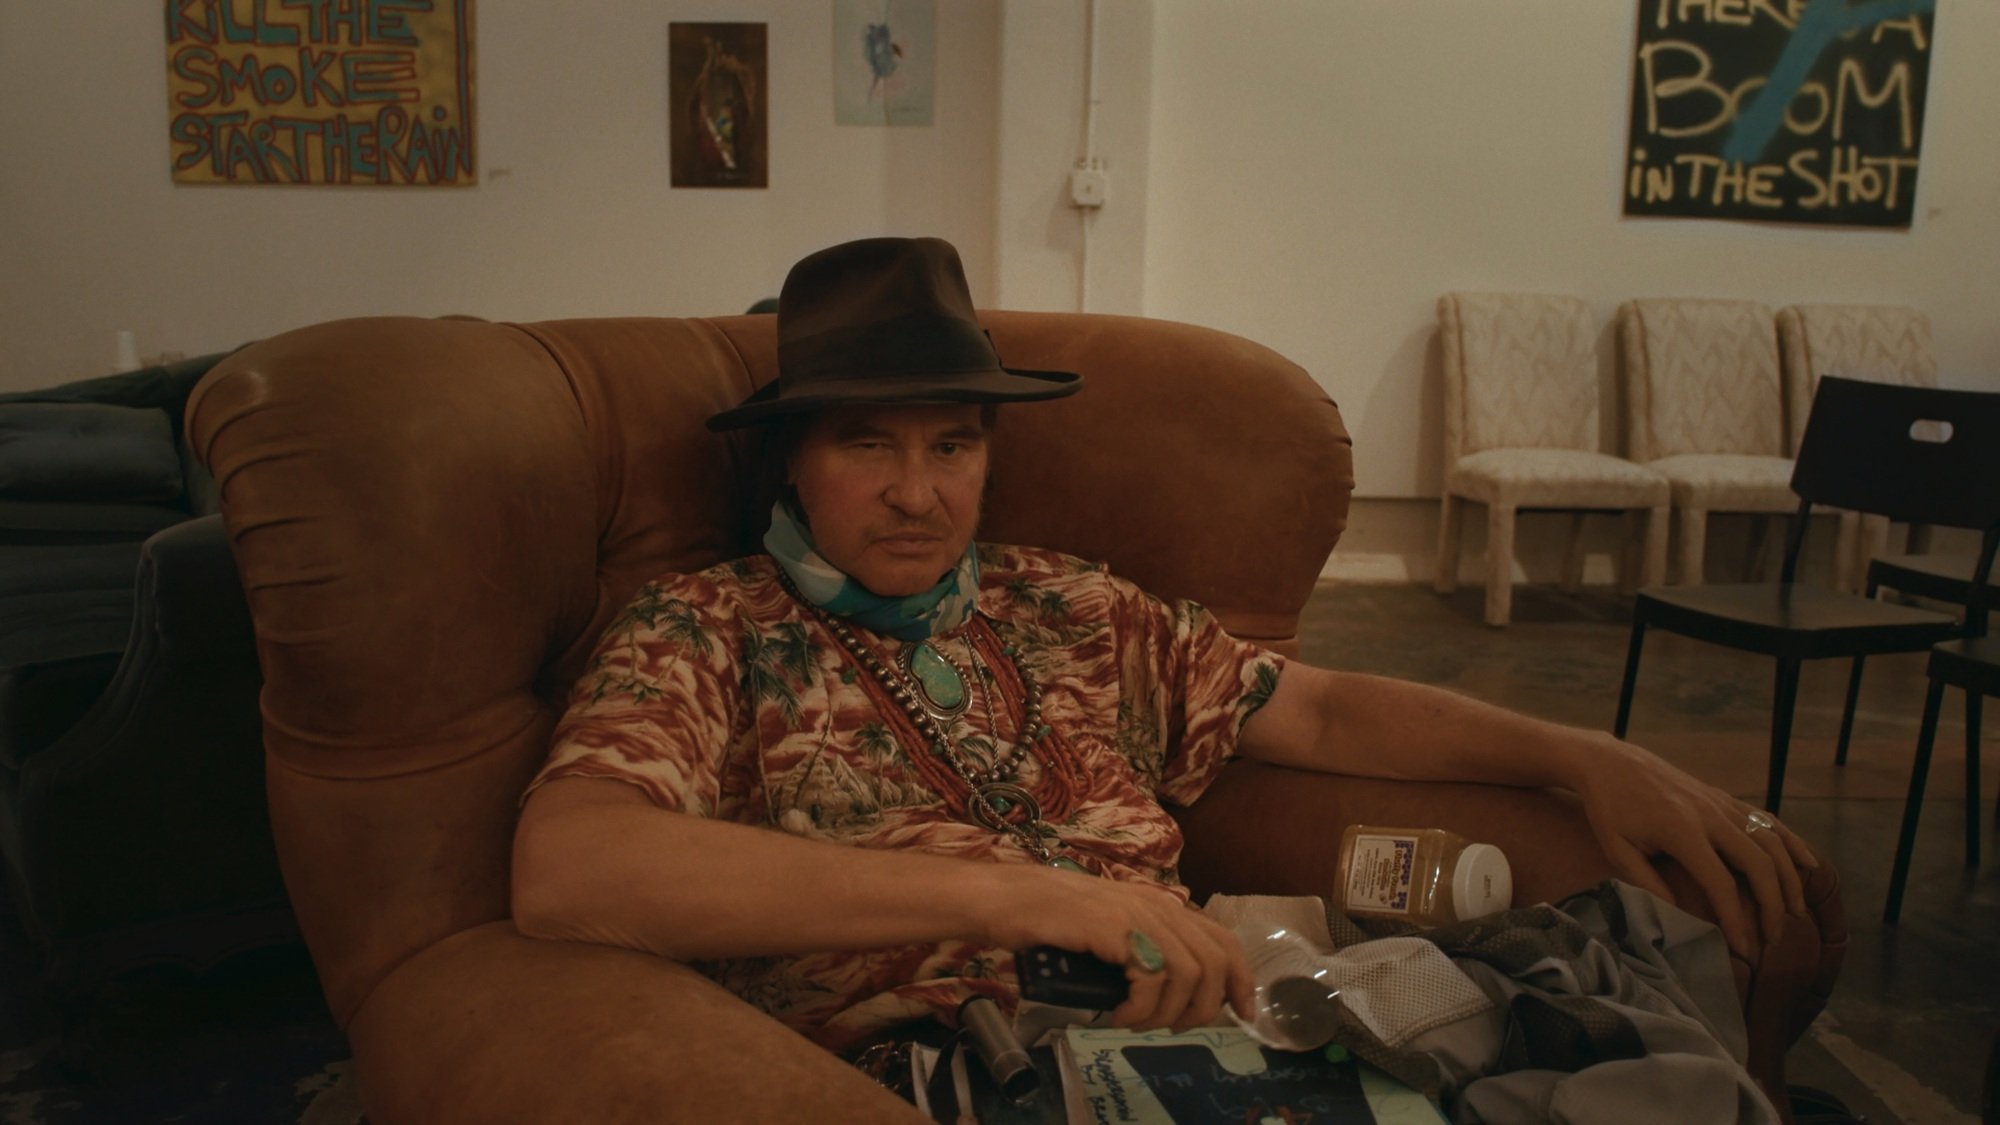 Val Kilmer sitting in a brown armchair.